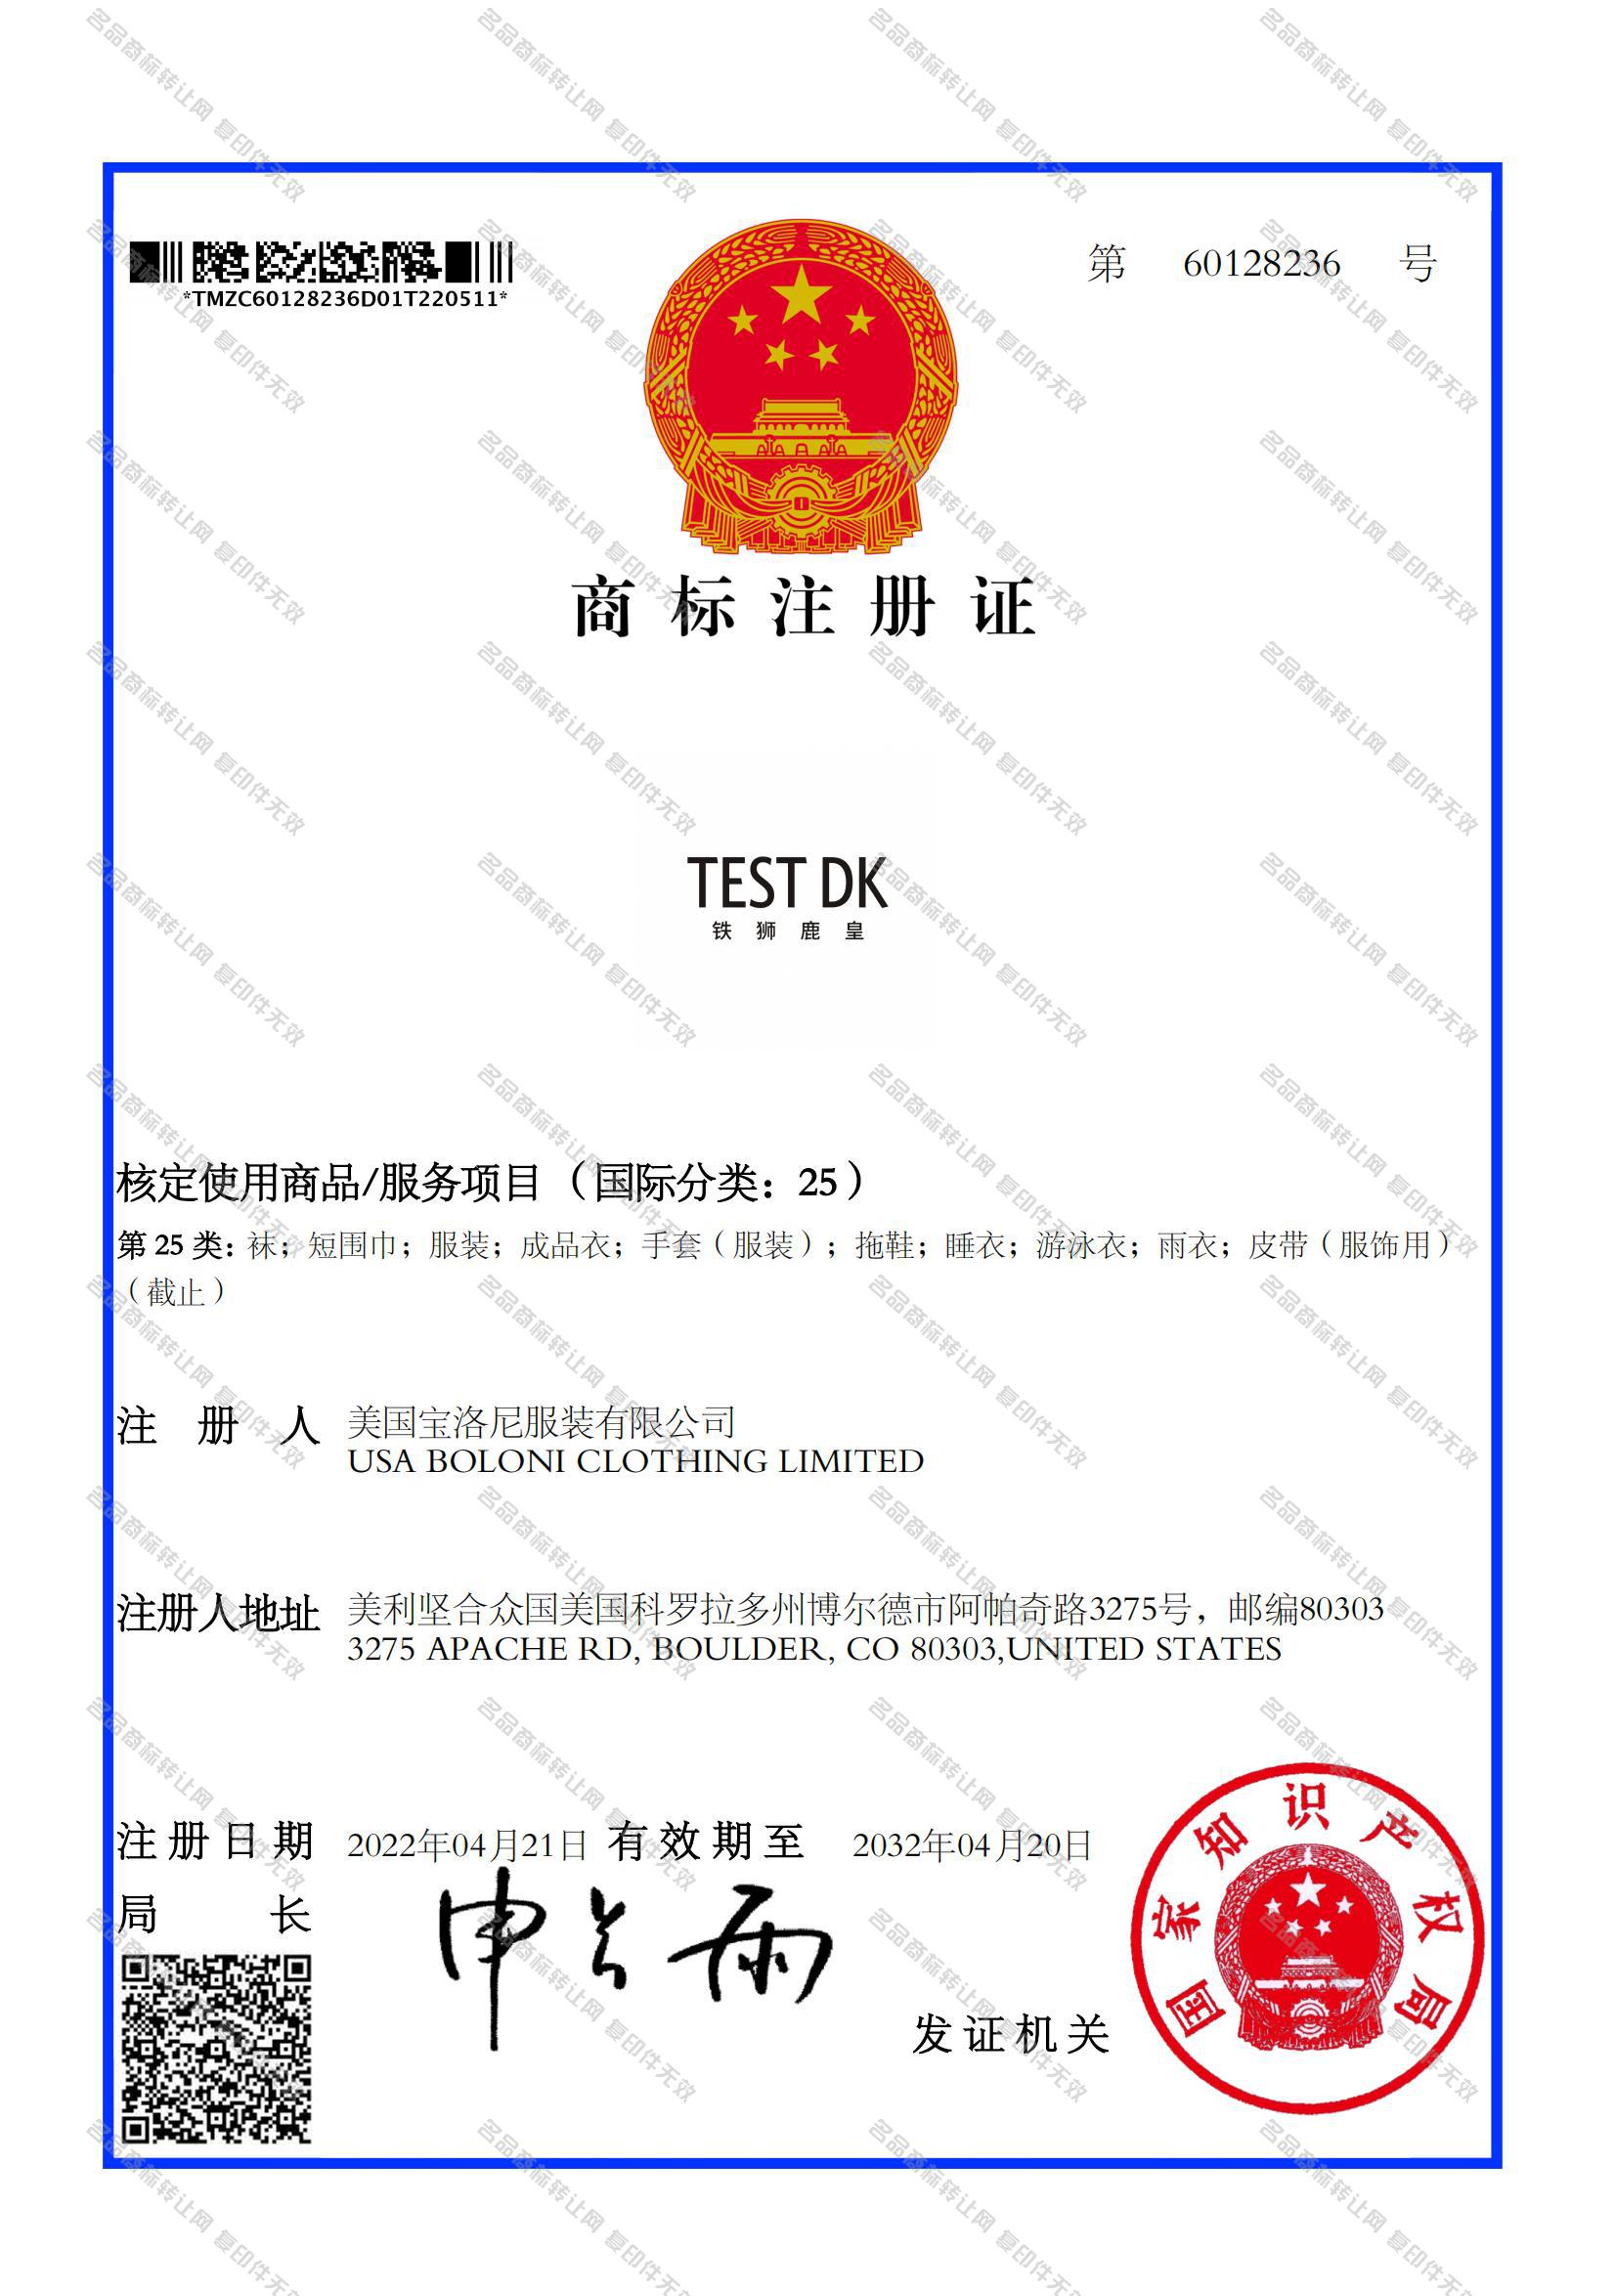 TEST DK 铁狮鹿皇注册证